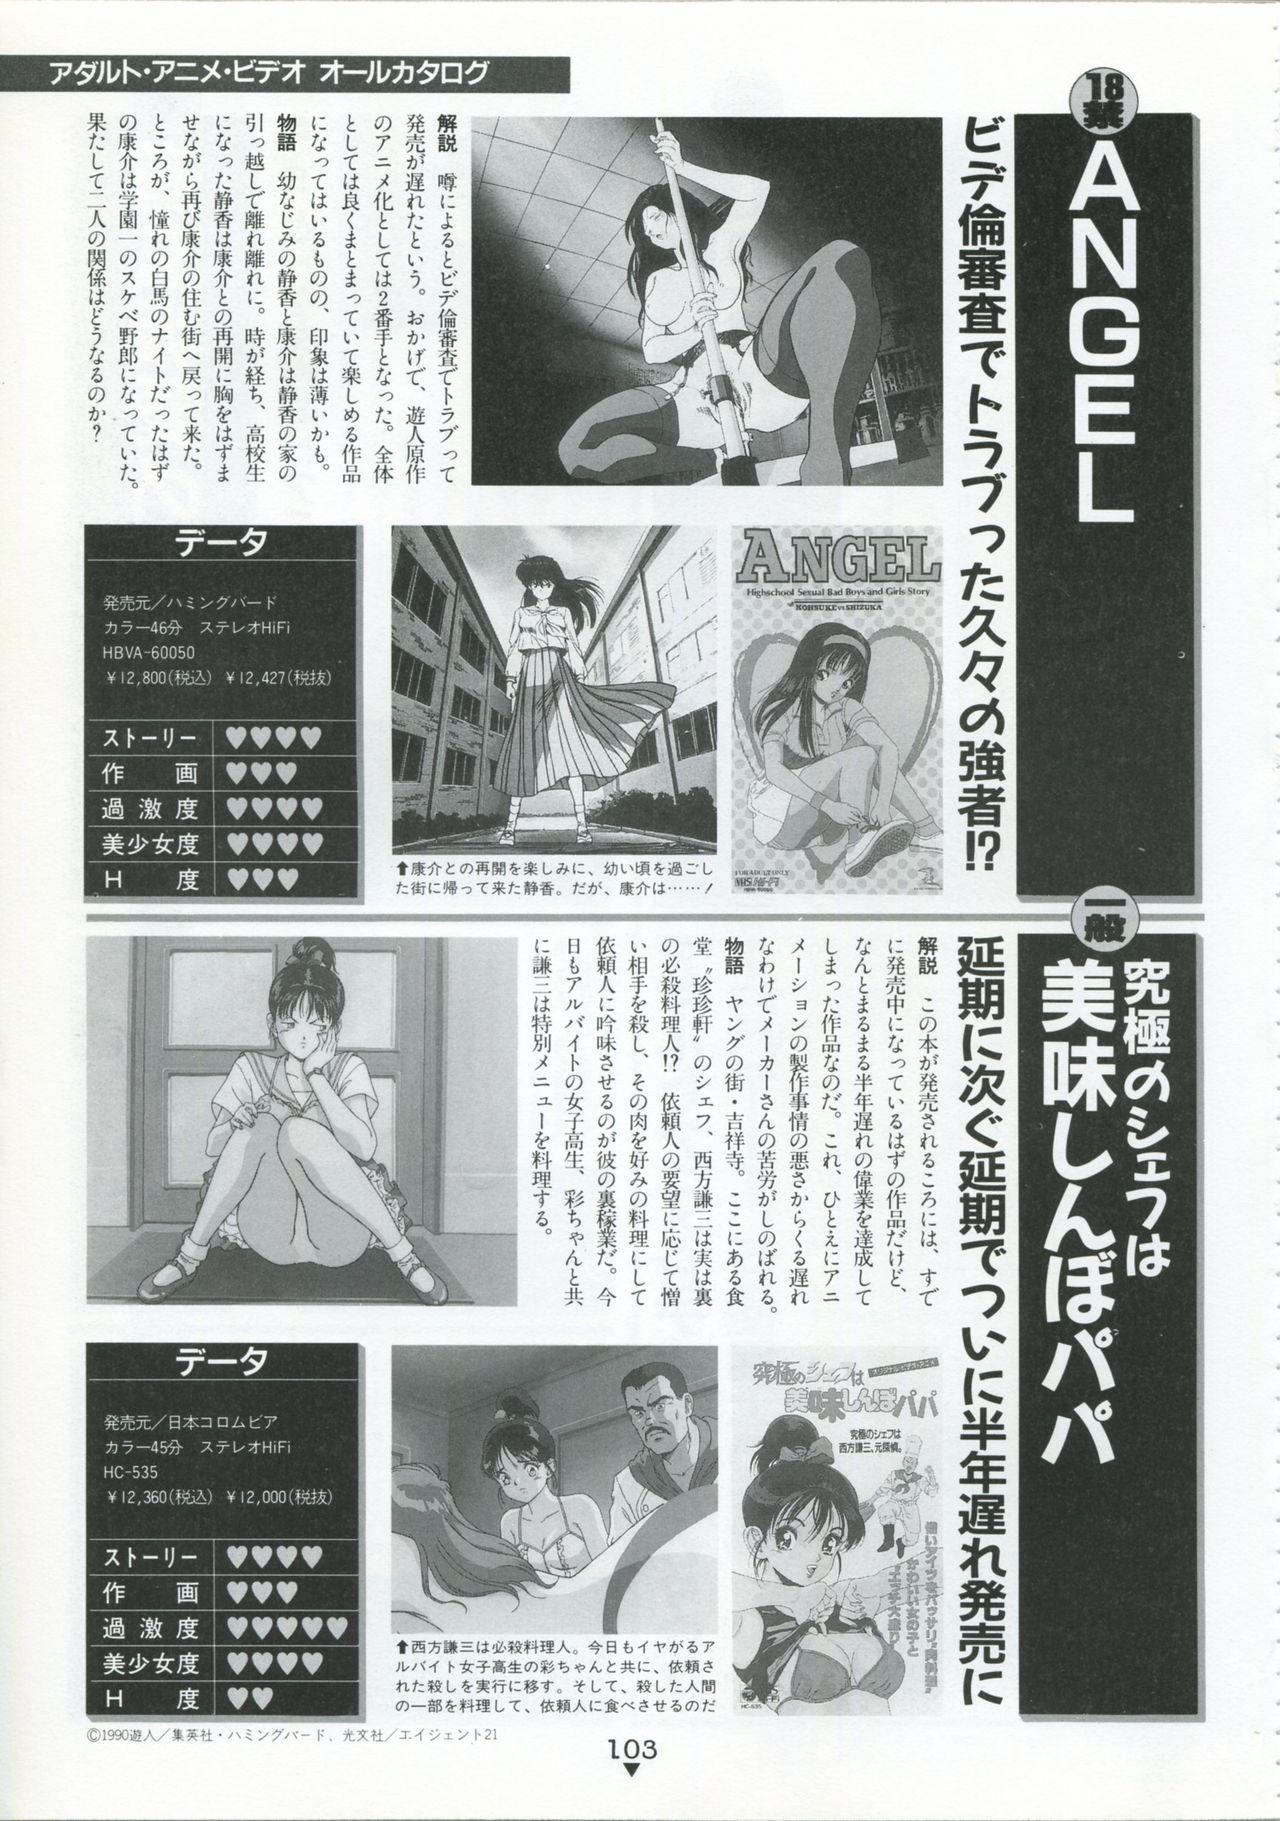 Bishoujo Anime Daizenshuu - Adult Animation Video Catalog 1991 98